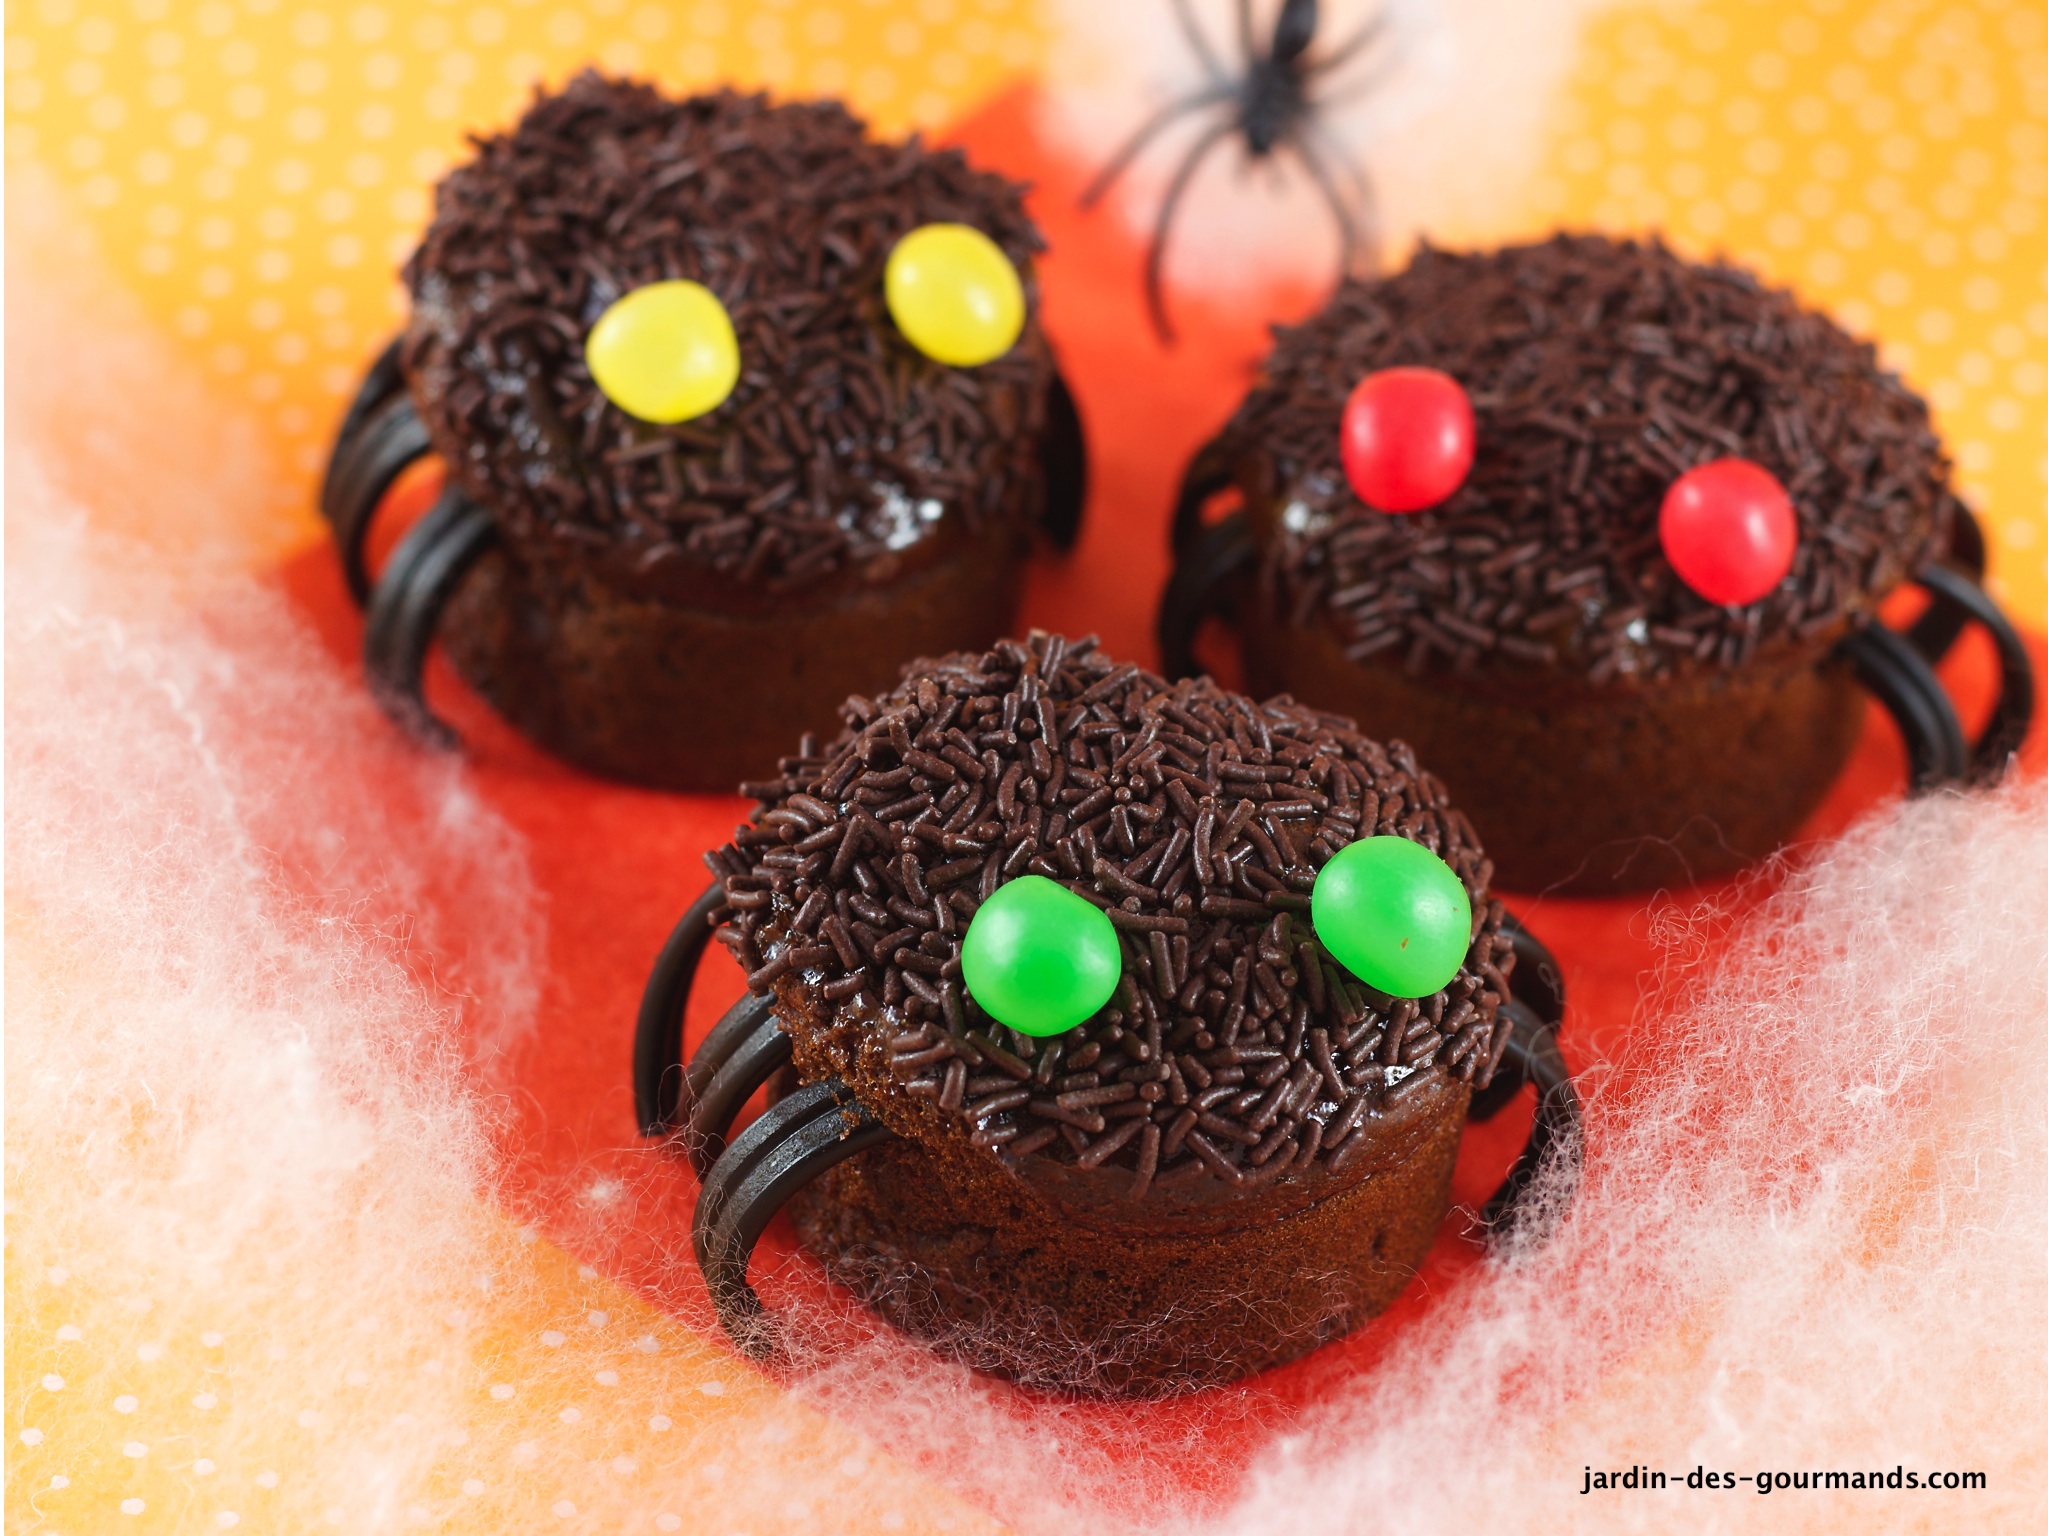 bonbons brigadeiro, bonbons au chocolat pour halloween, araignée